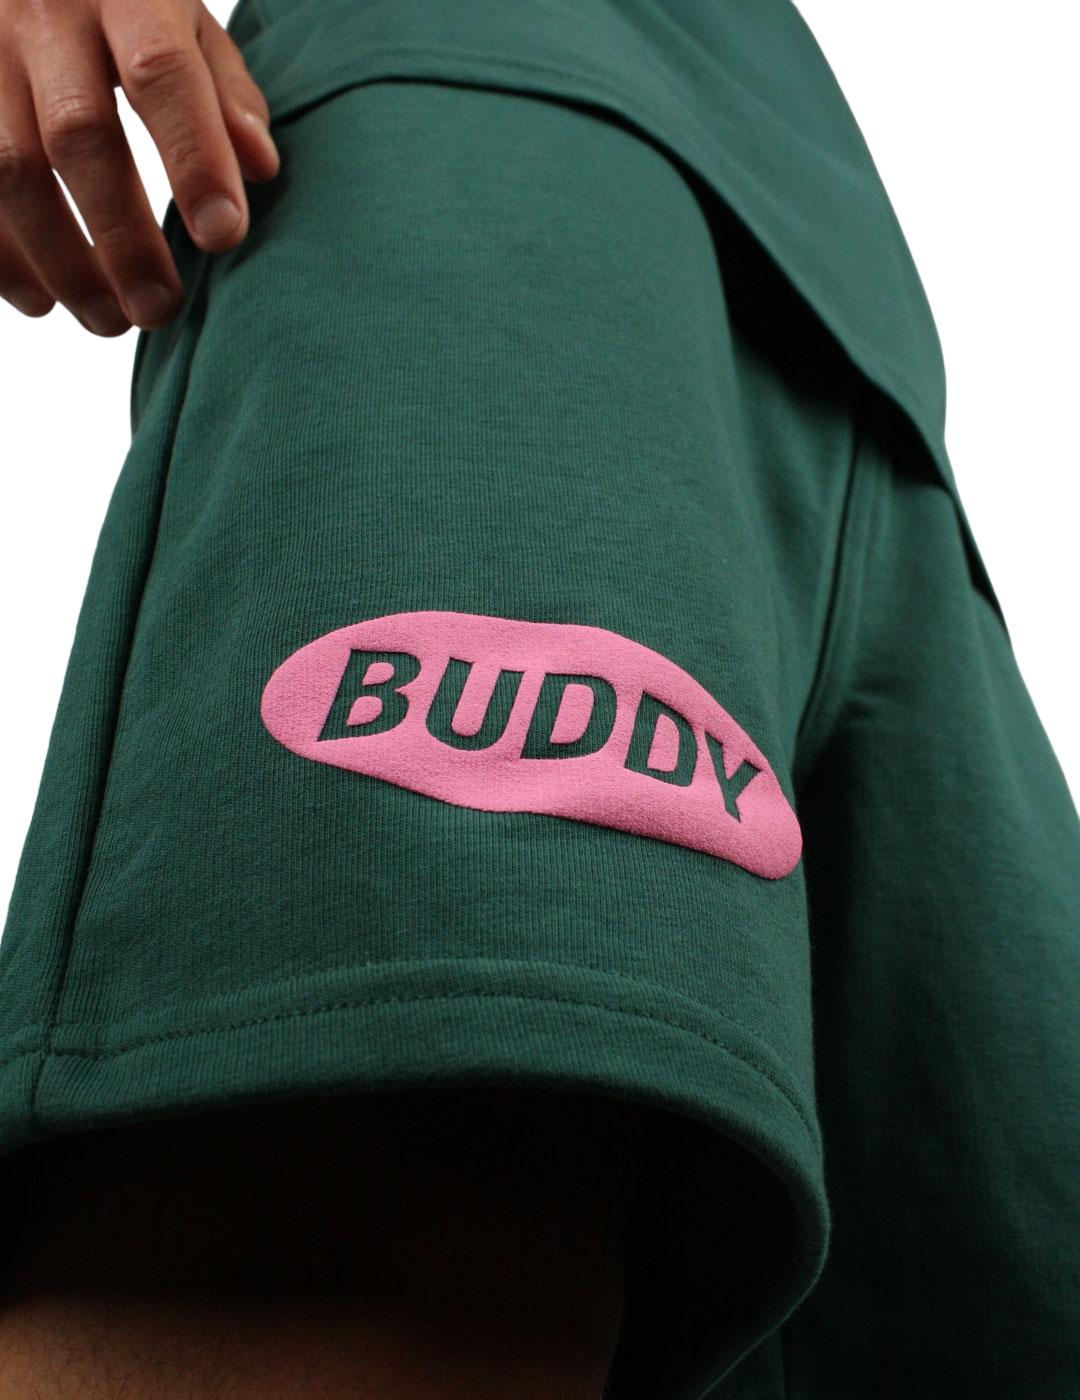 Pantalón corto Buddy verde botella logo rosa